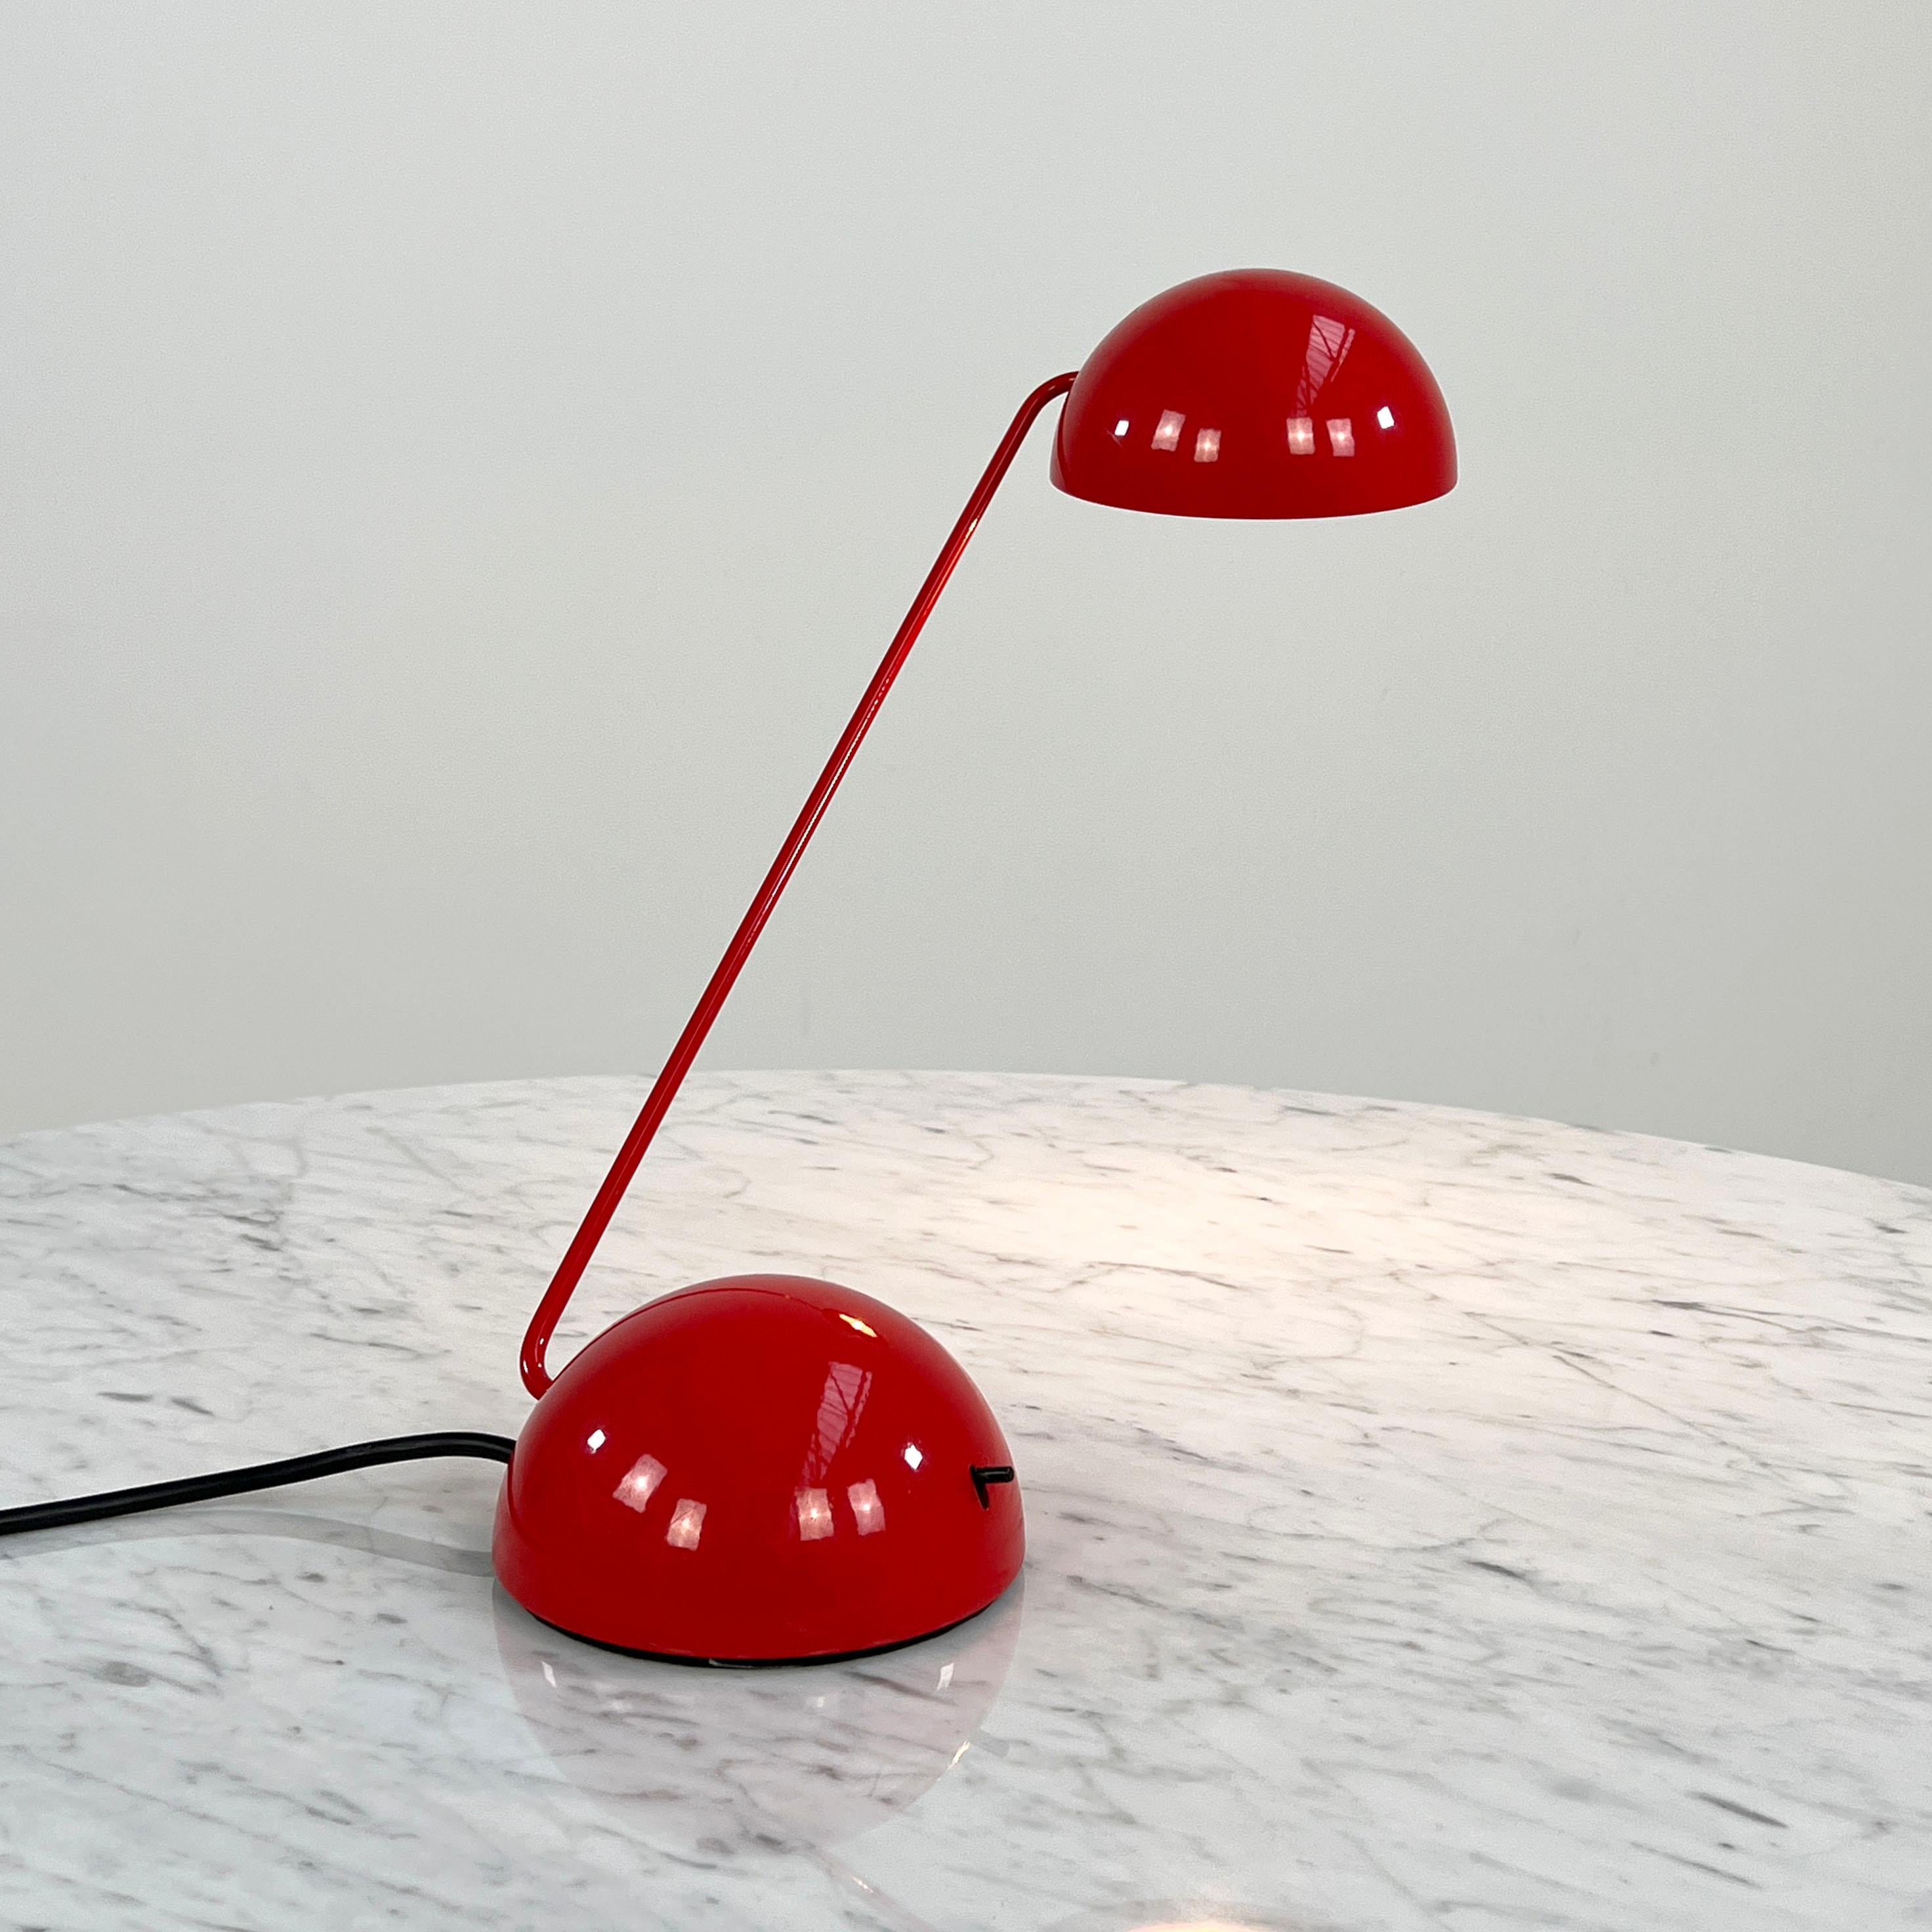 Red bikini table Light by Barbieri & Marianelli for Tronconi, 1970s
Designer - Barbieri & Marianelli
Producer - Tronconi
Model - bikini table light
Design Period - Seventies
Measurements - width 15 cm x depth 13 cm x height 47 cm
Materials -